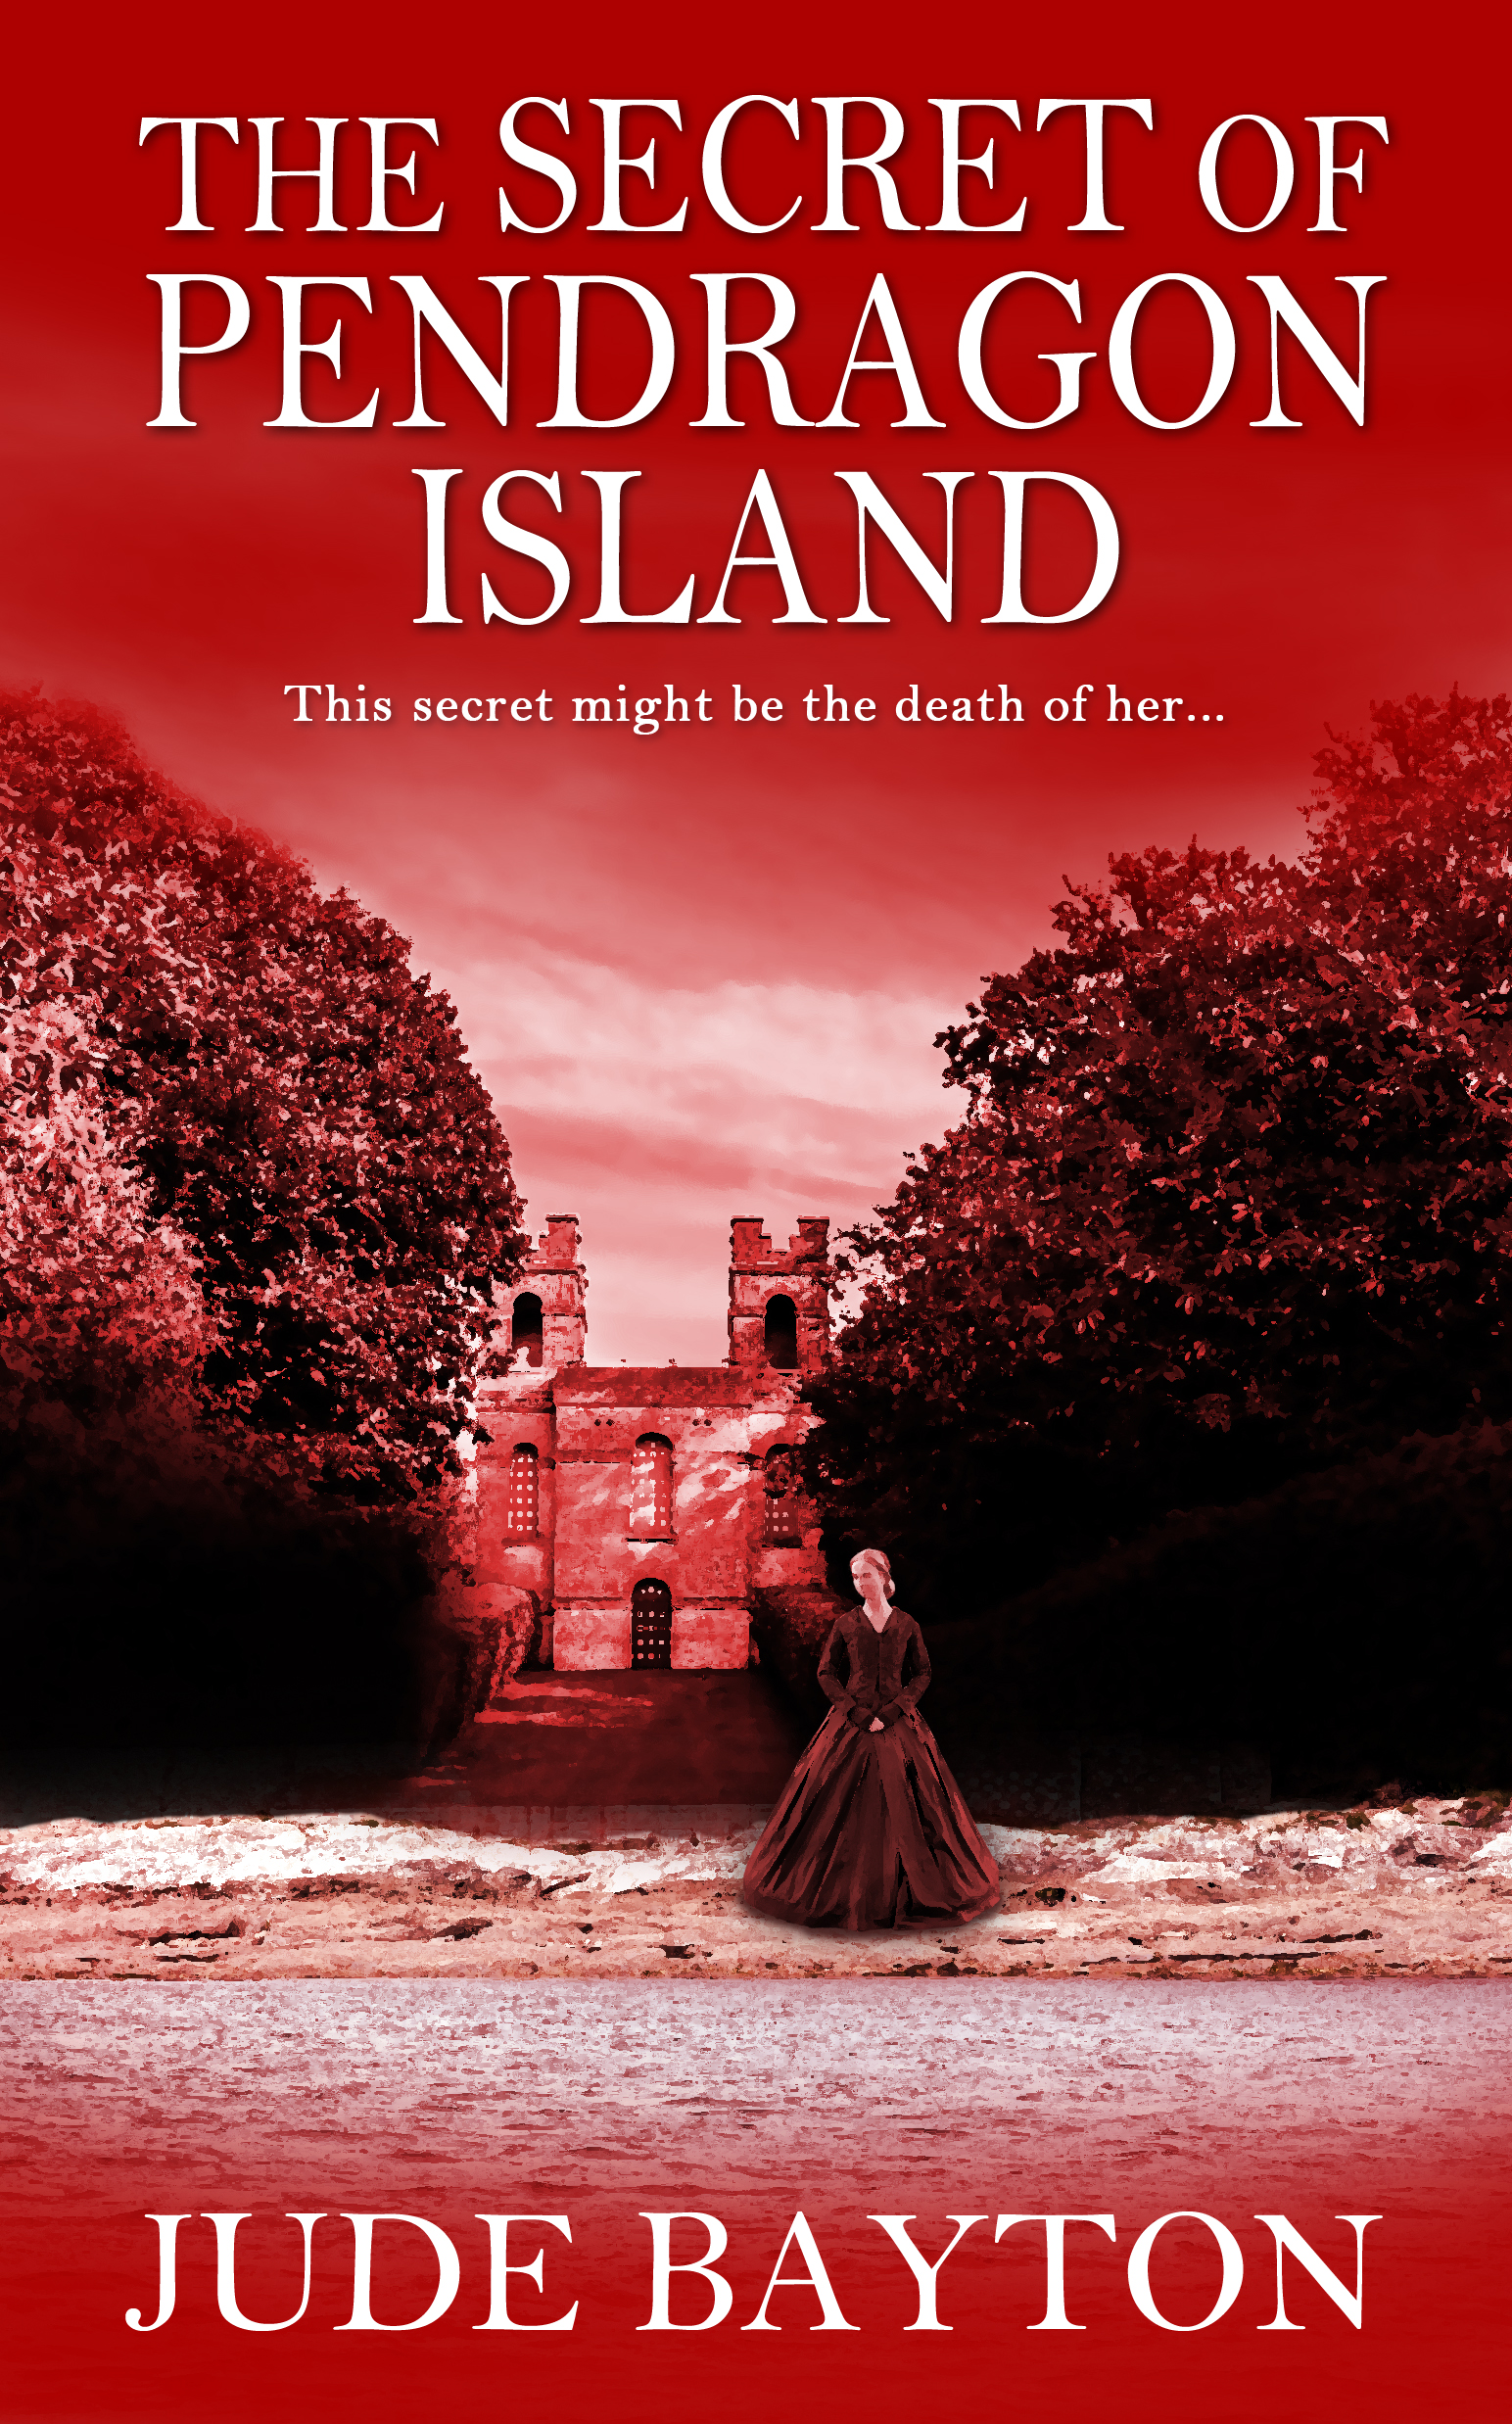 The Secret of Pendragon Island